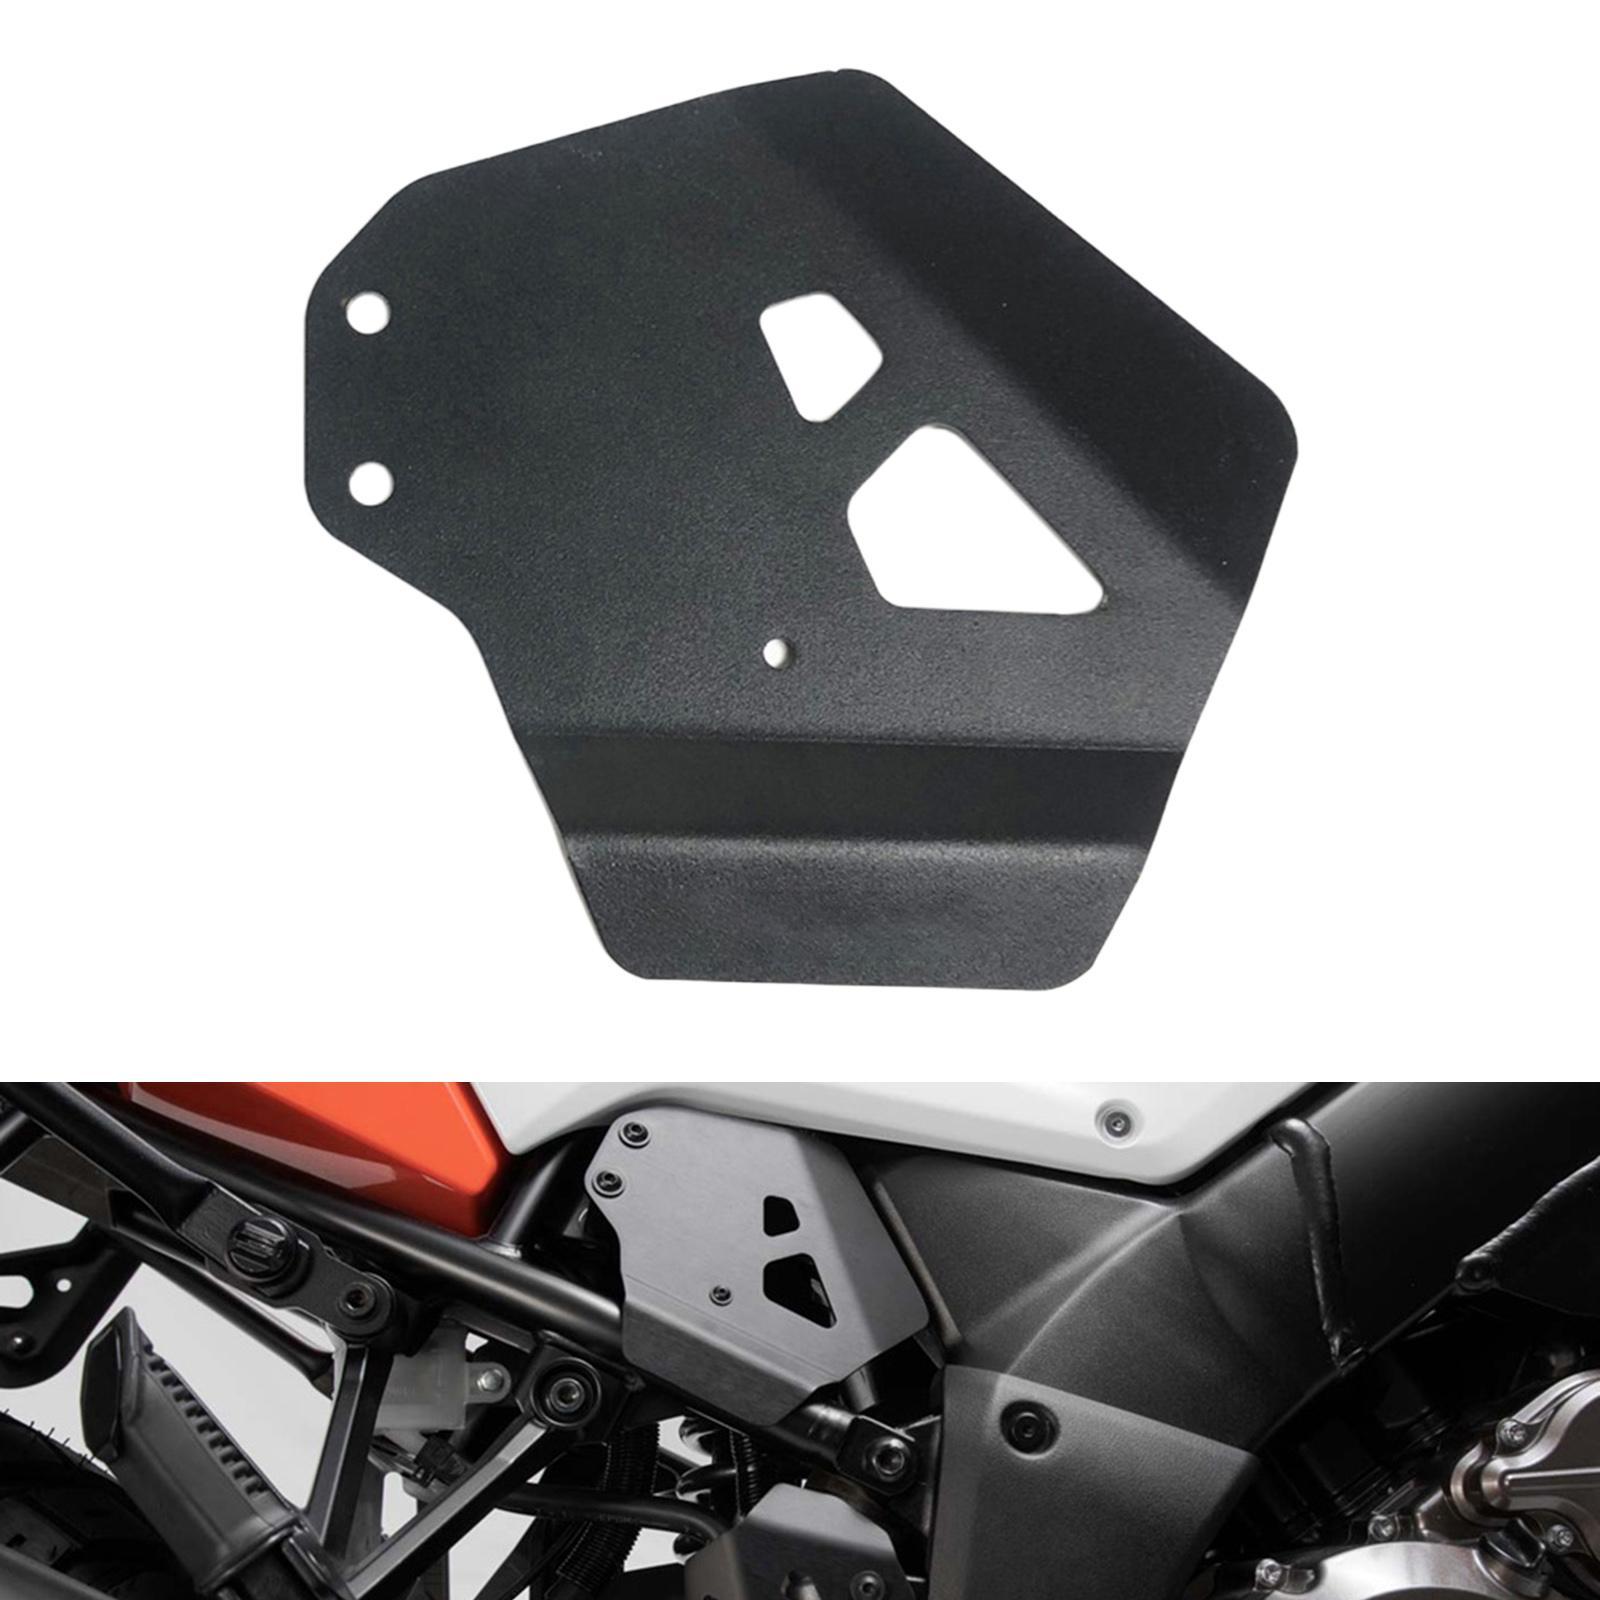 Motorcycle Body Heat Shield for Suzuki DL1050XT DL1050A DL1050 V-Strom DL1050, Easy to Install